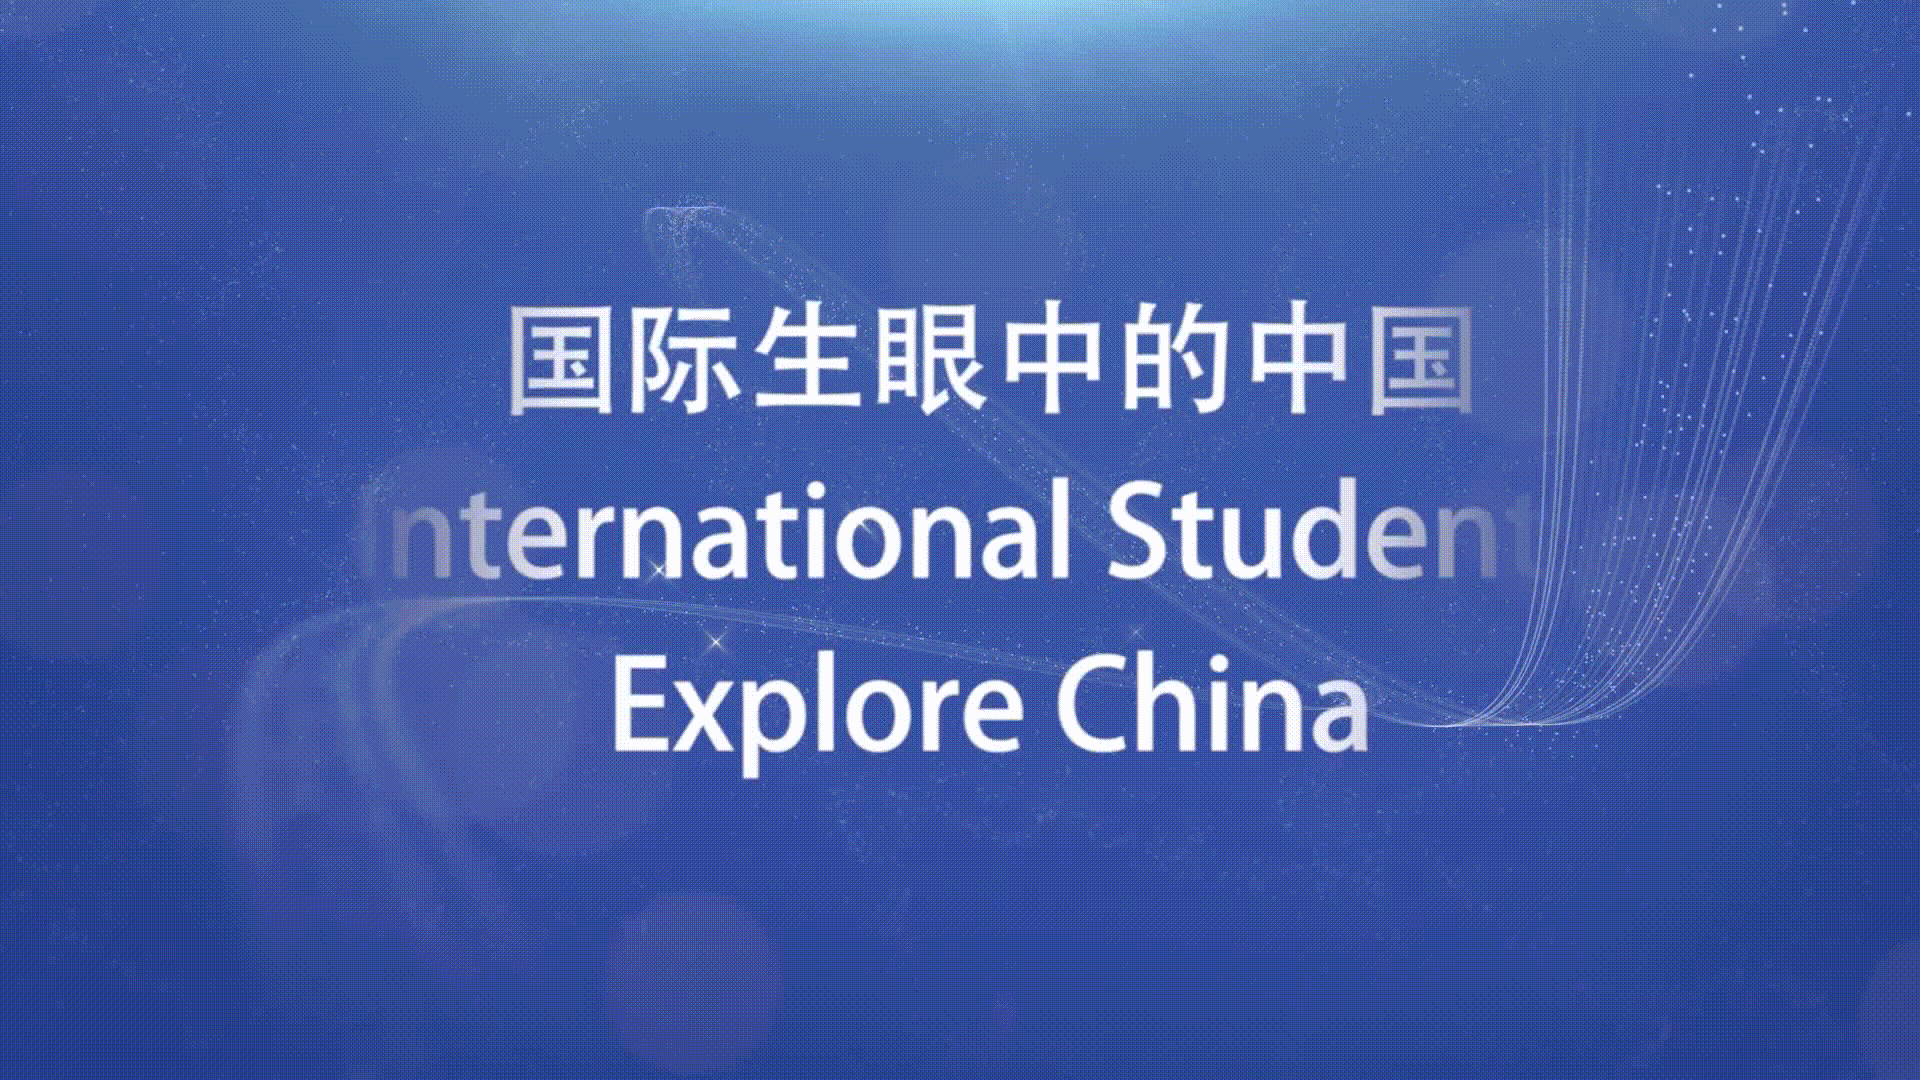 International students explore China